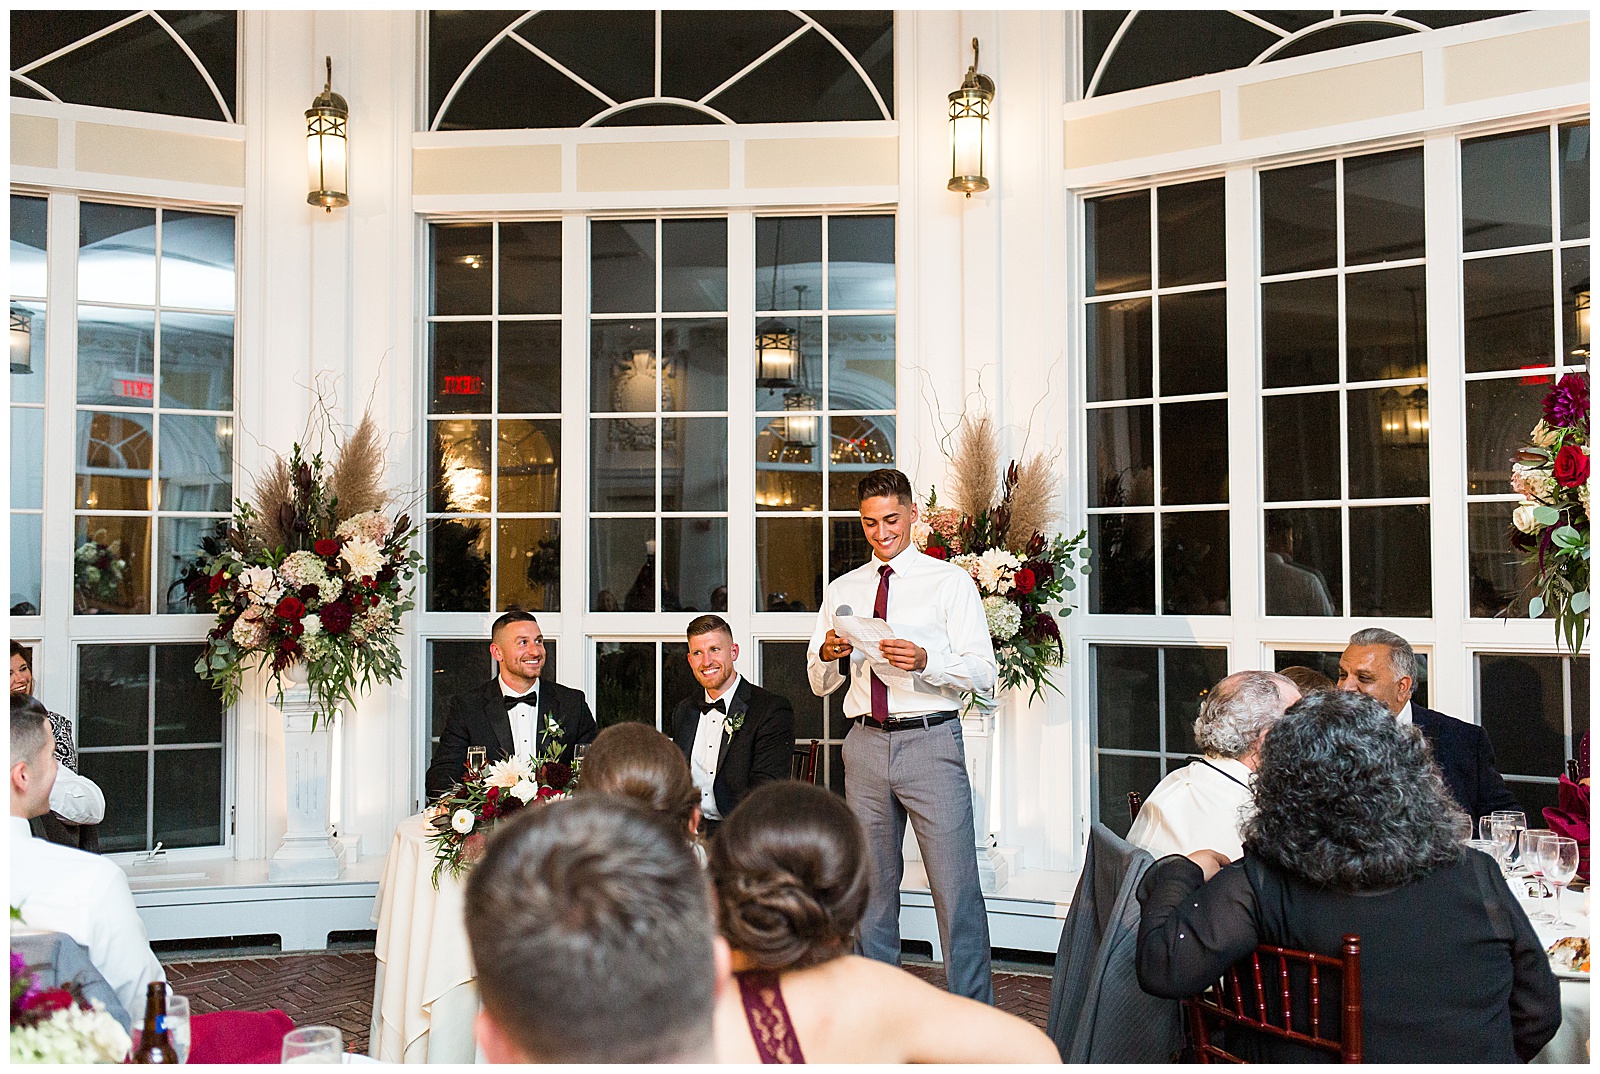 wedding reception toasts at Tupper Manor